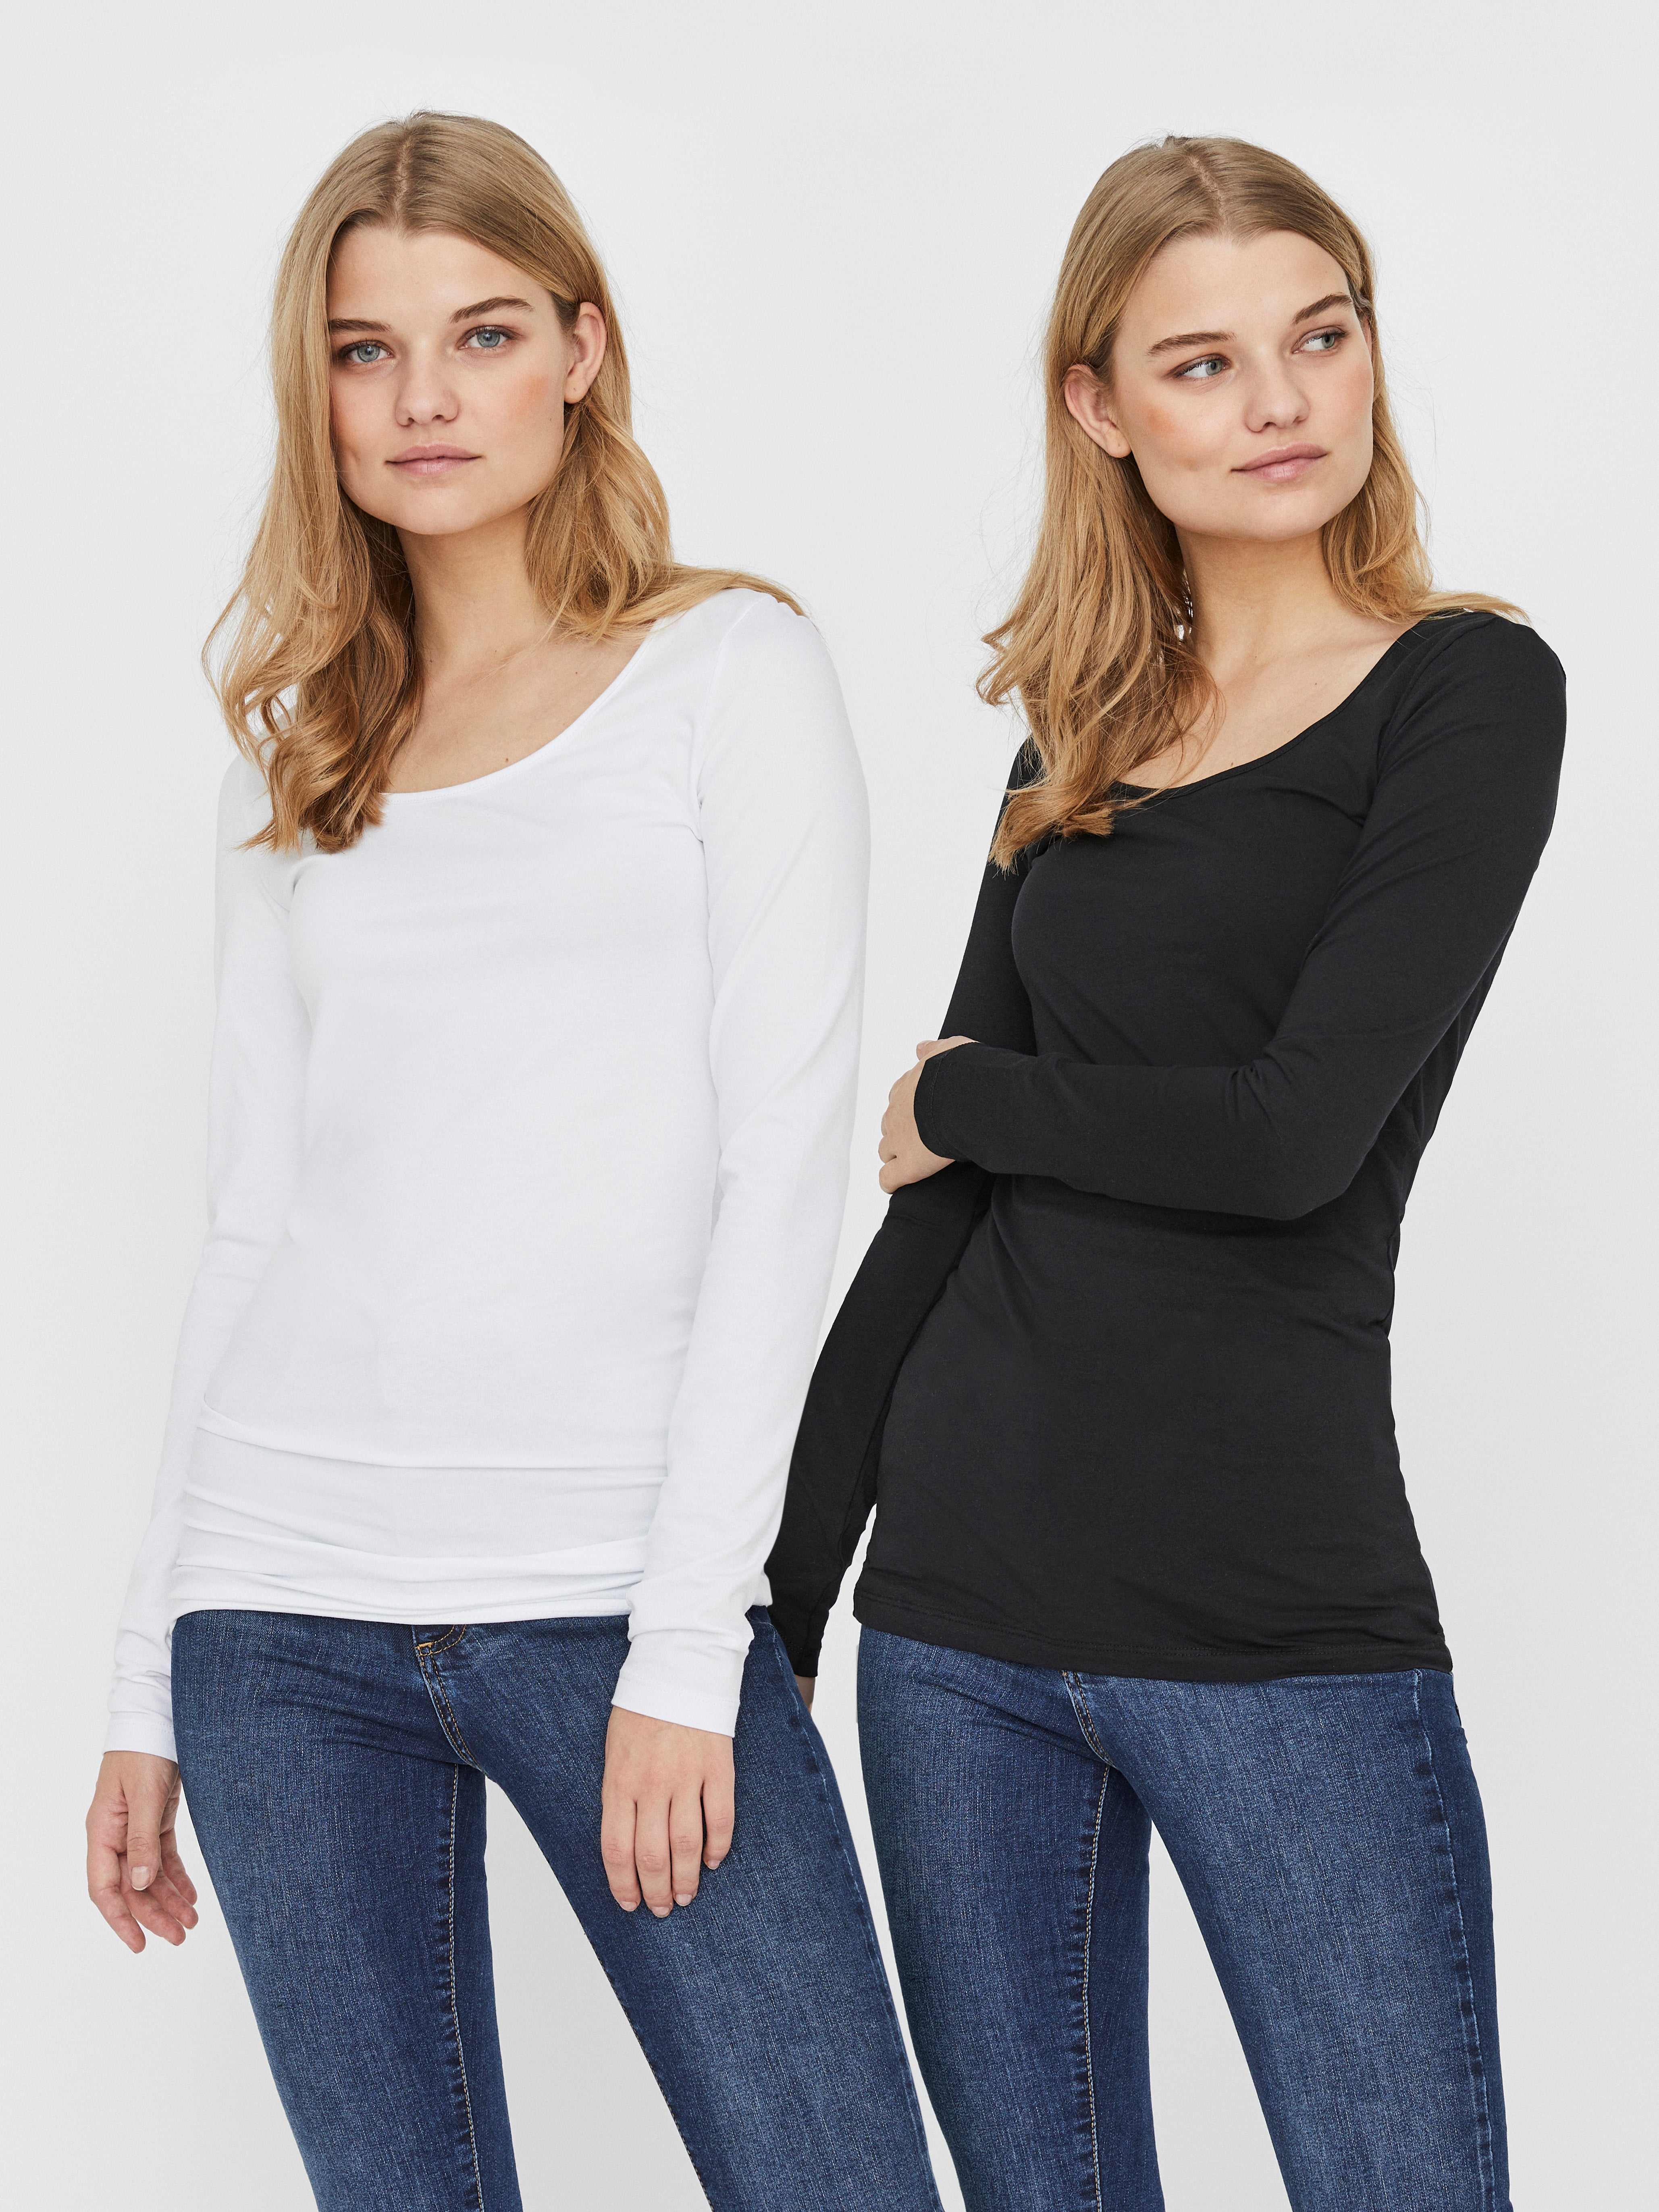 Vero Moda Long Sleeve Blouse white-black allover print business style Fashion Blouses Long Sleeve Blouses 